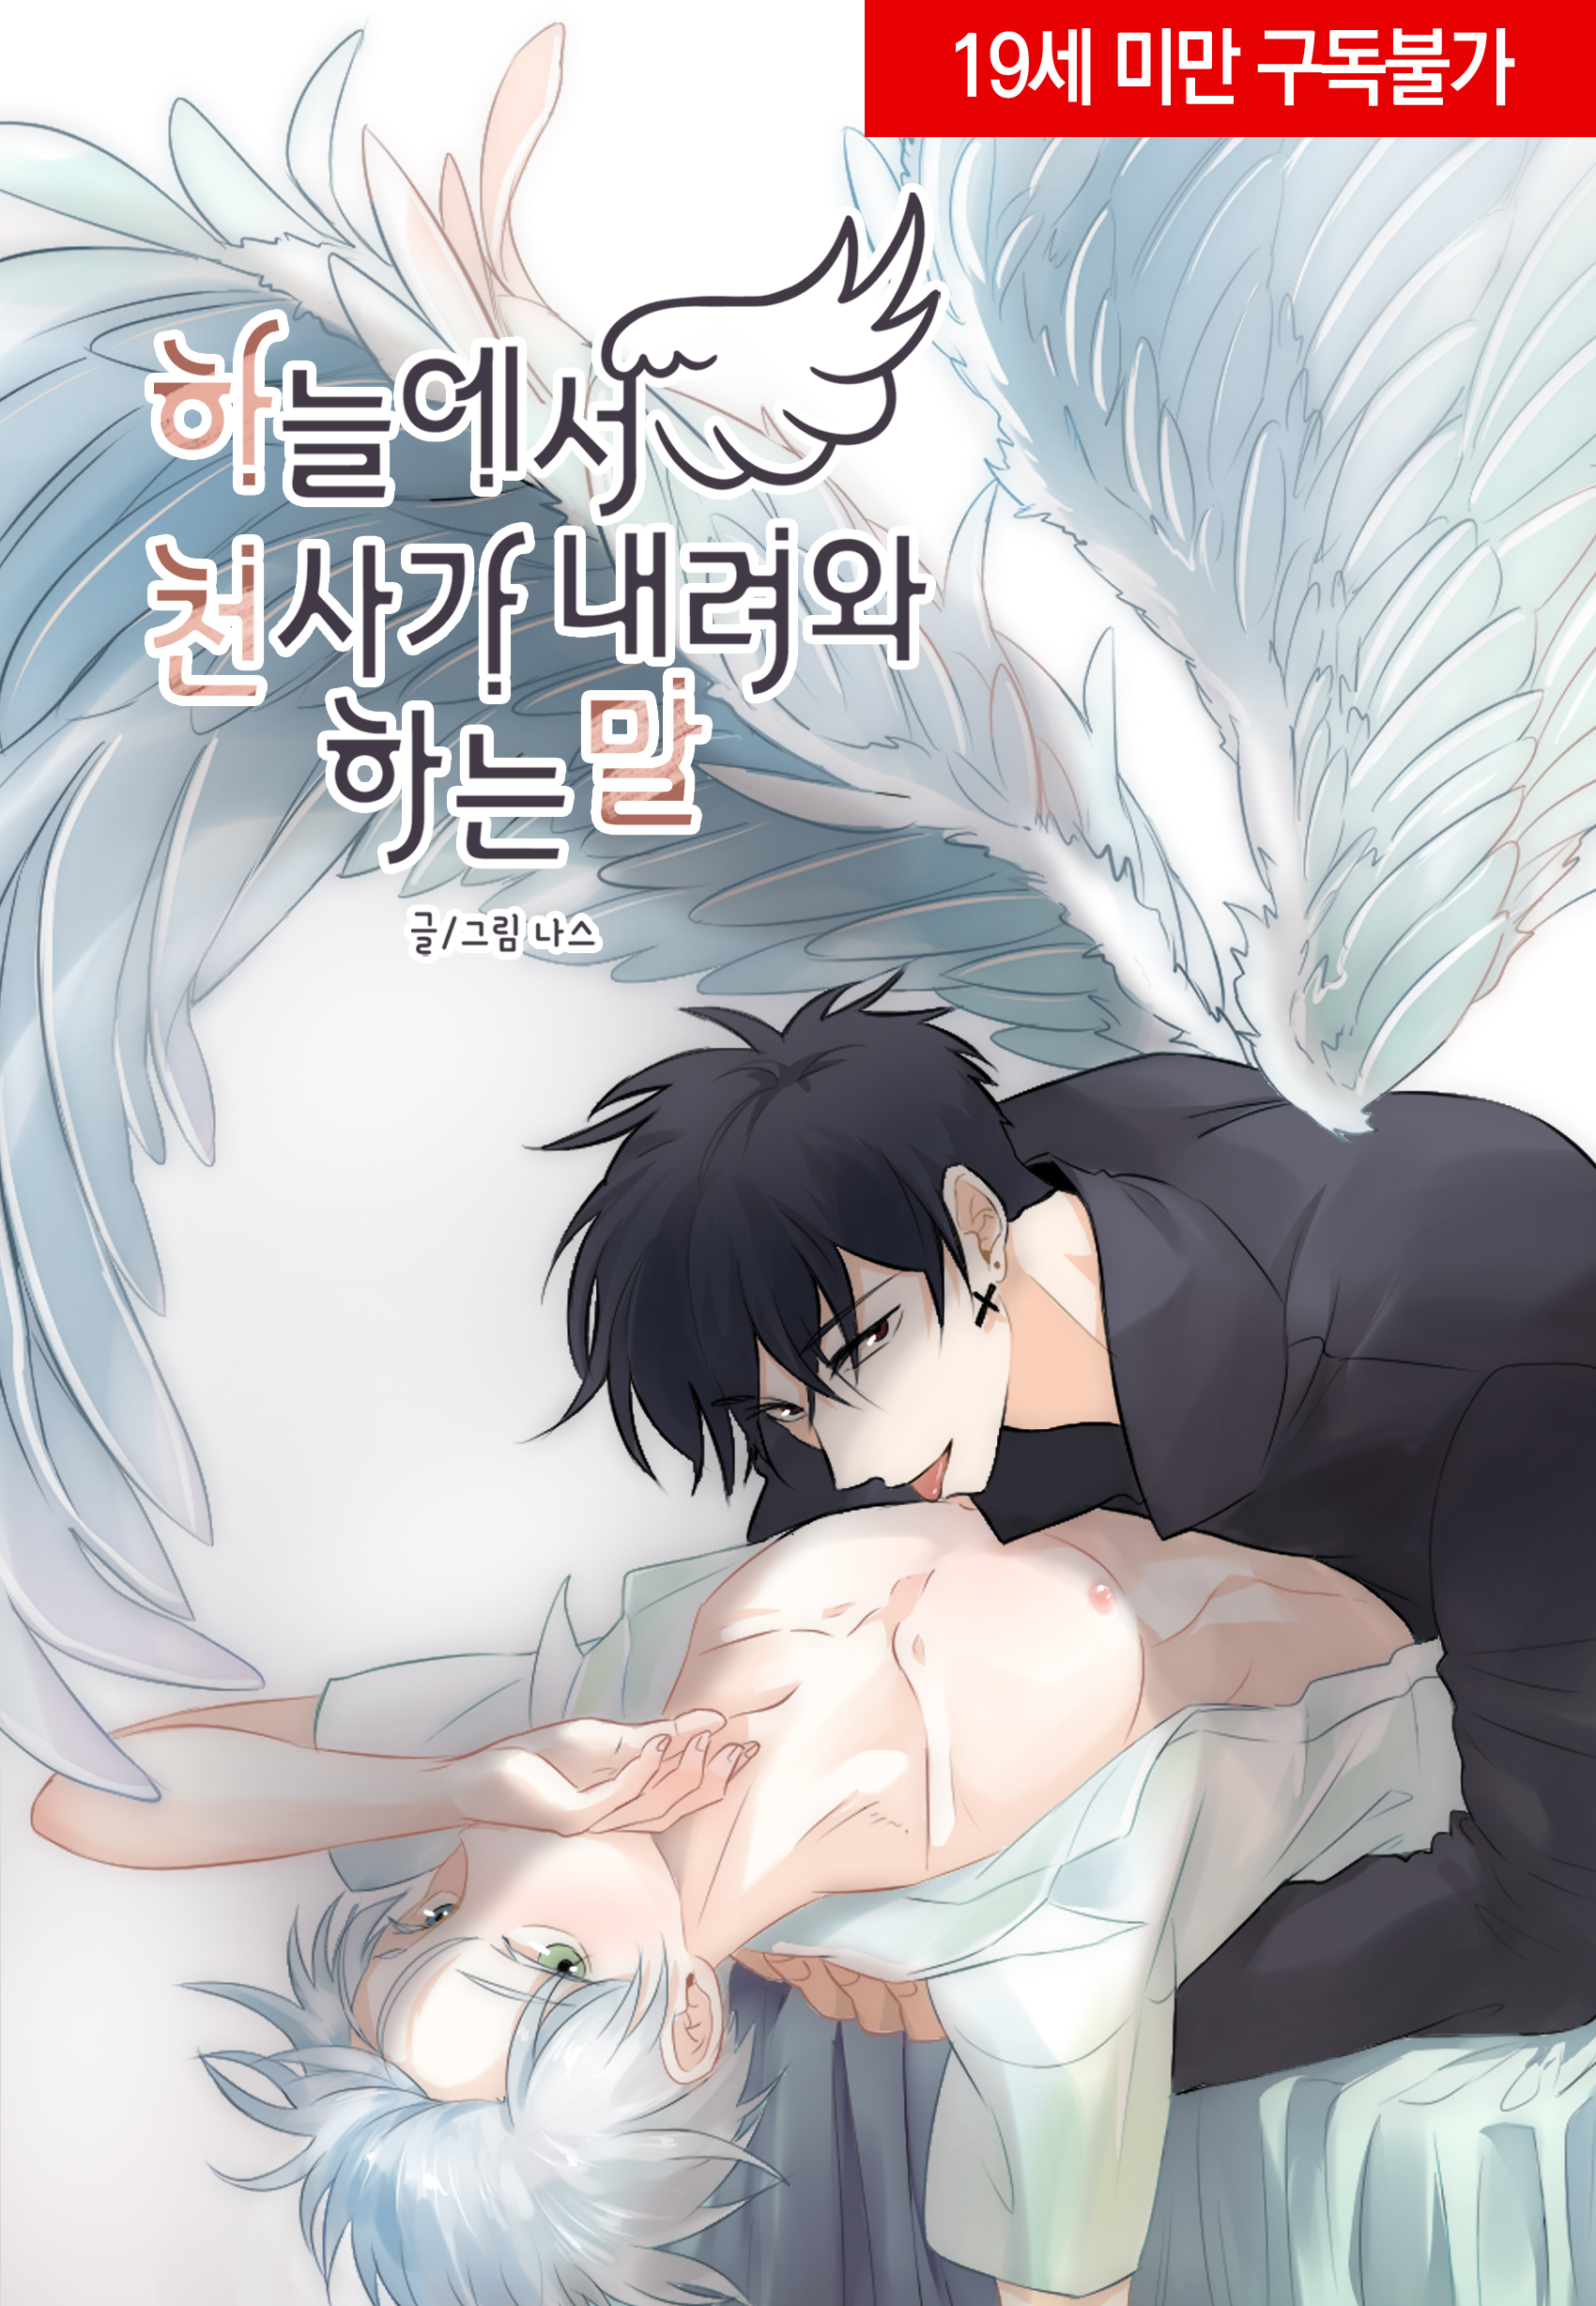 1  Chapter 6 - One Room Angel - MangaDex